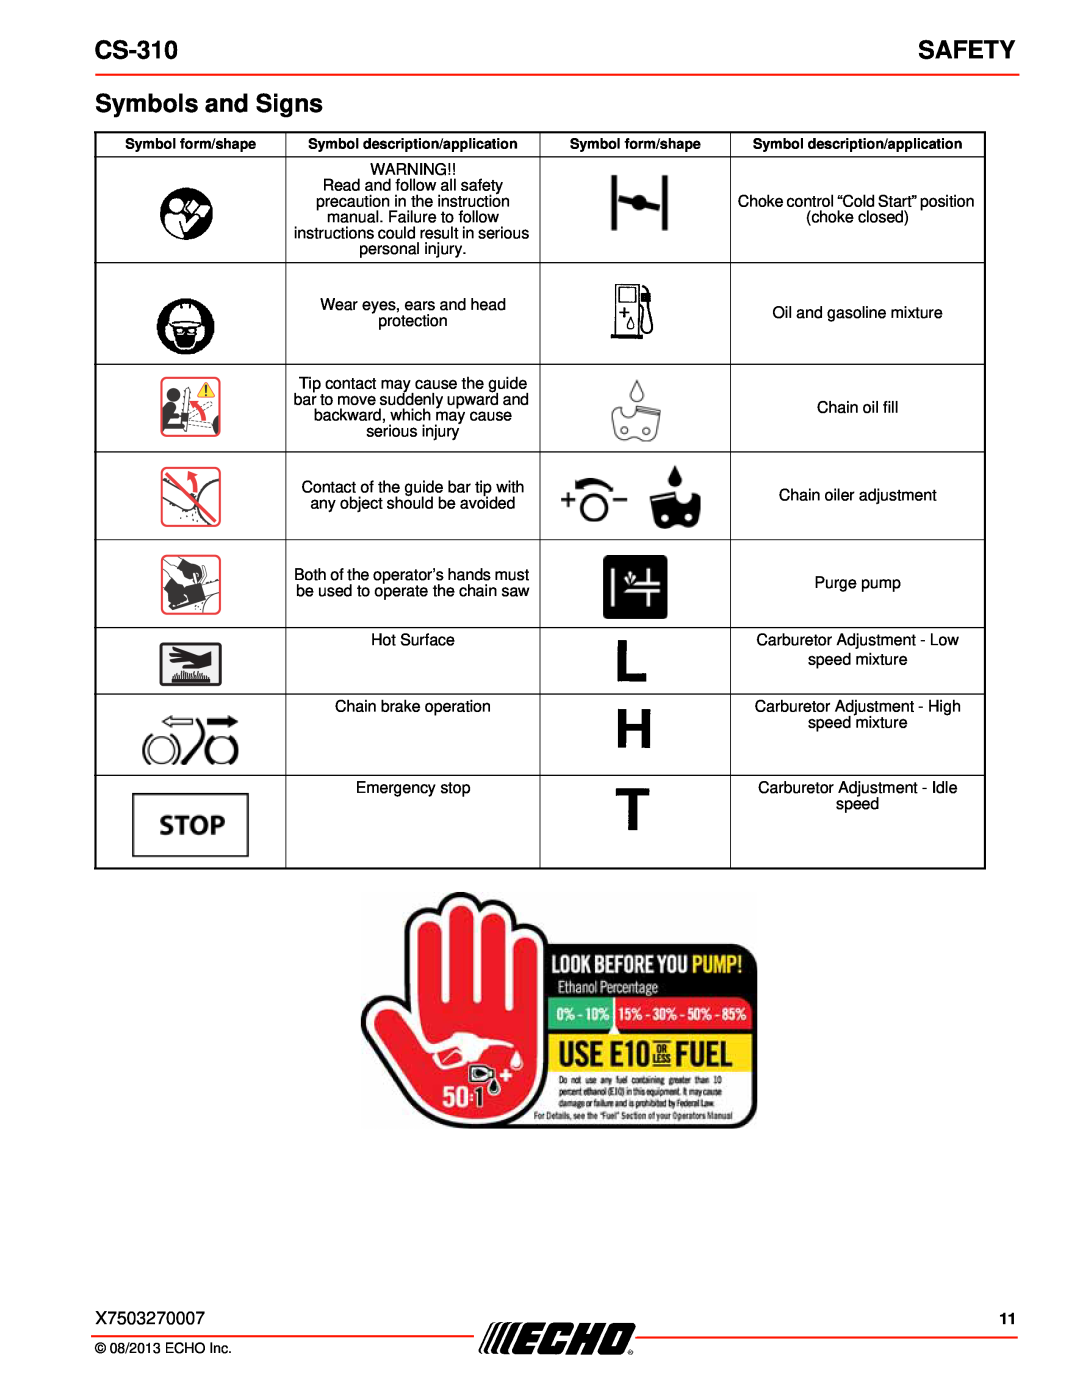 Echo CS-310 instruction manual Symbols and Signs, Safety, Symbol form/shape 